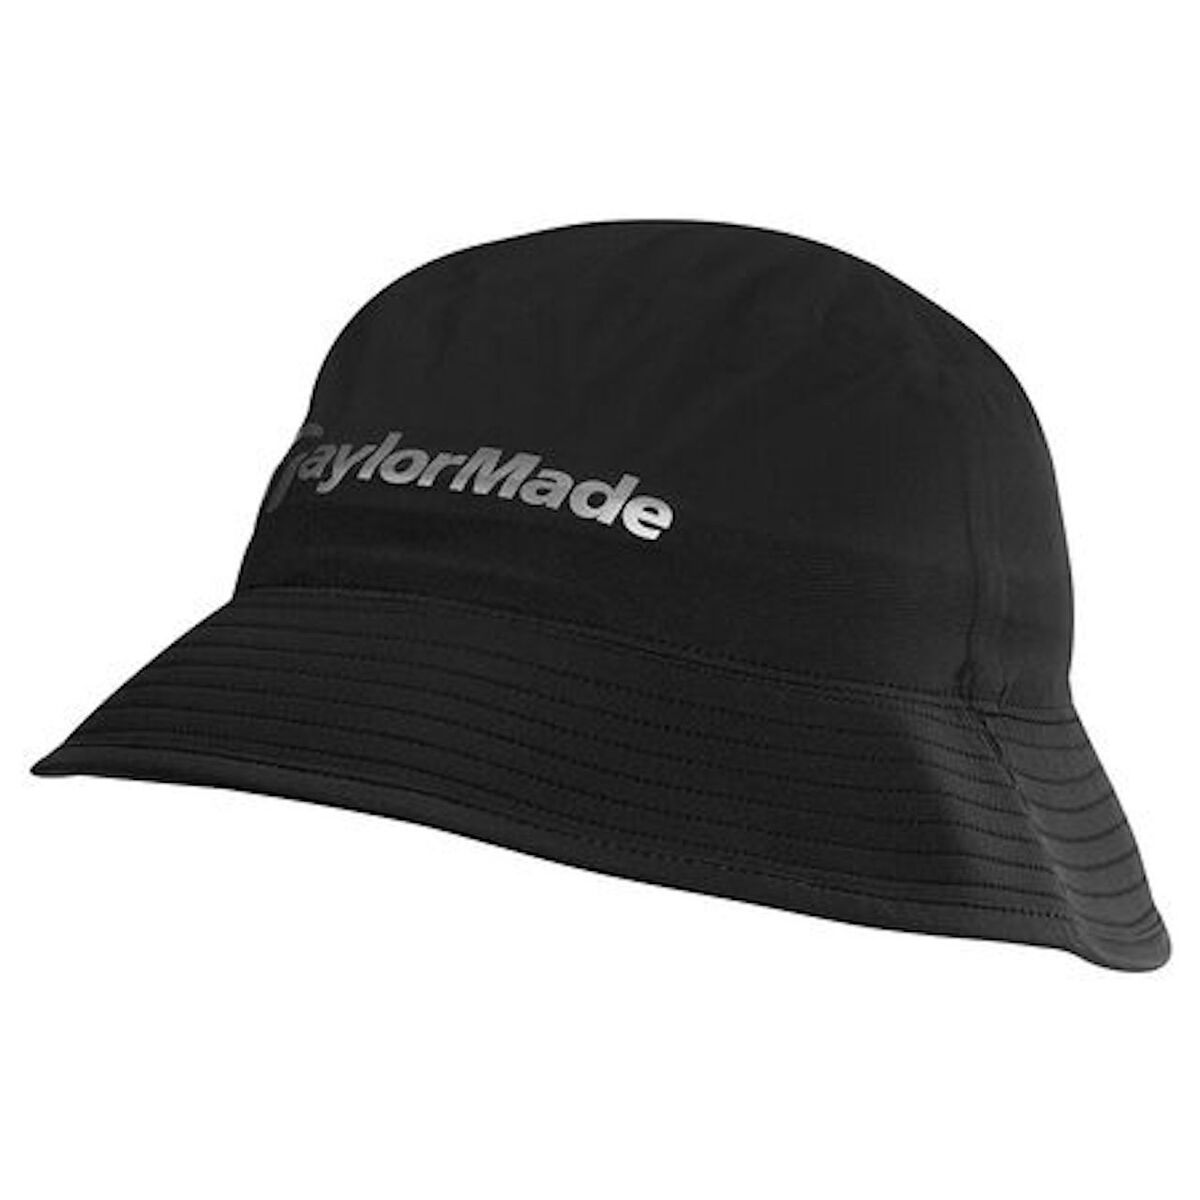 TaylorMade golf bucket hat